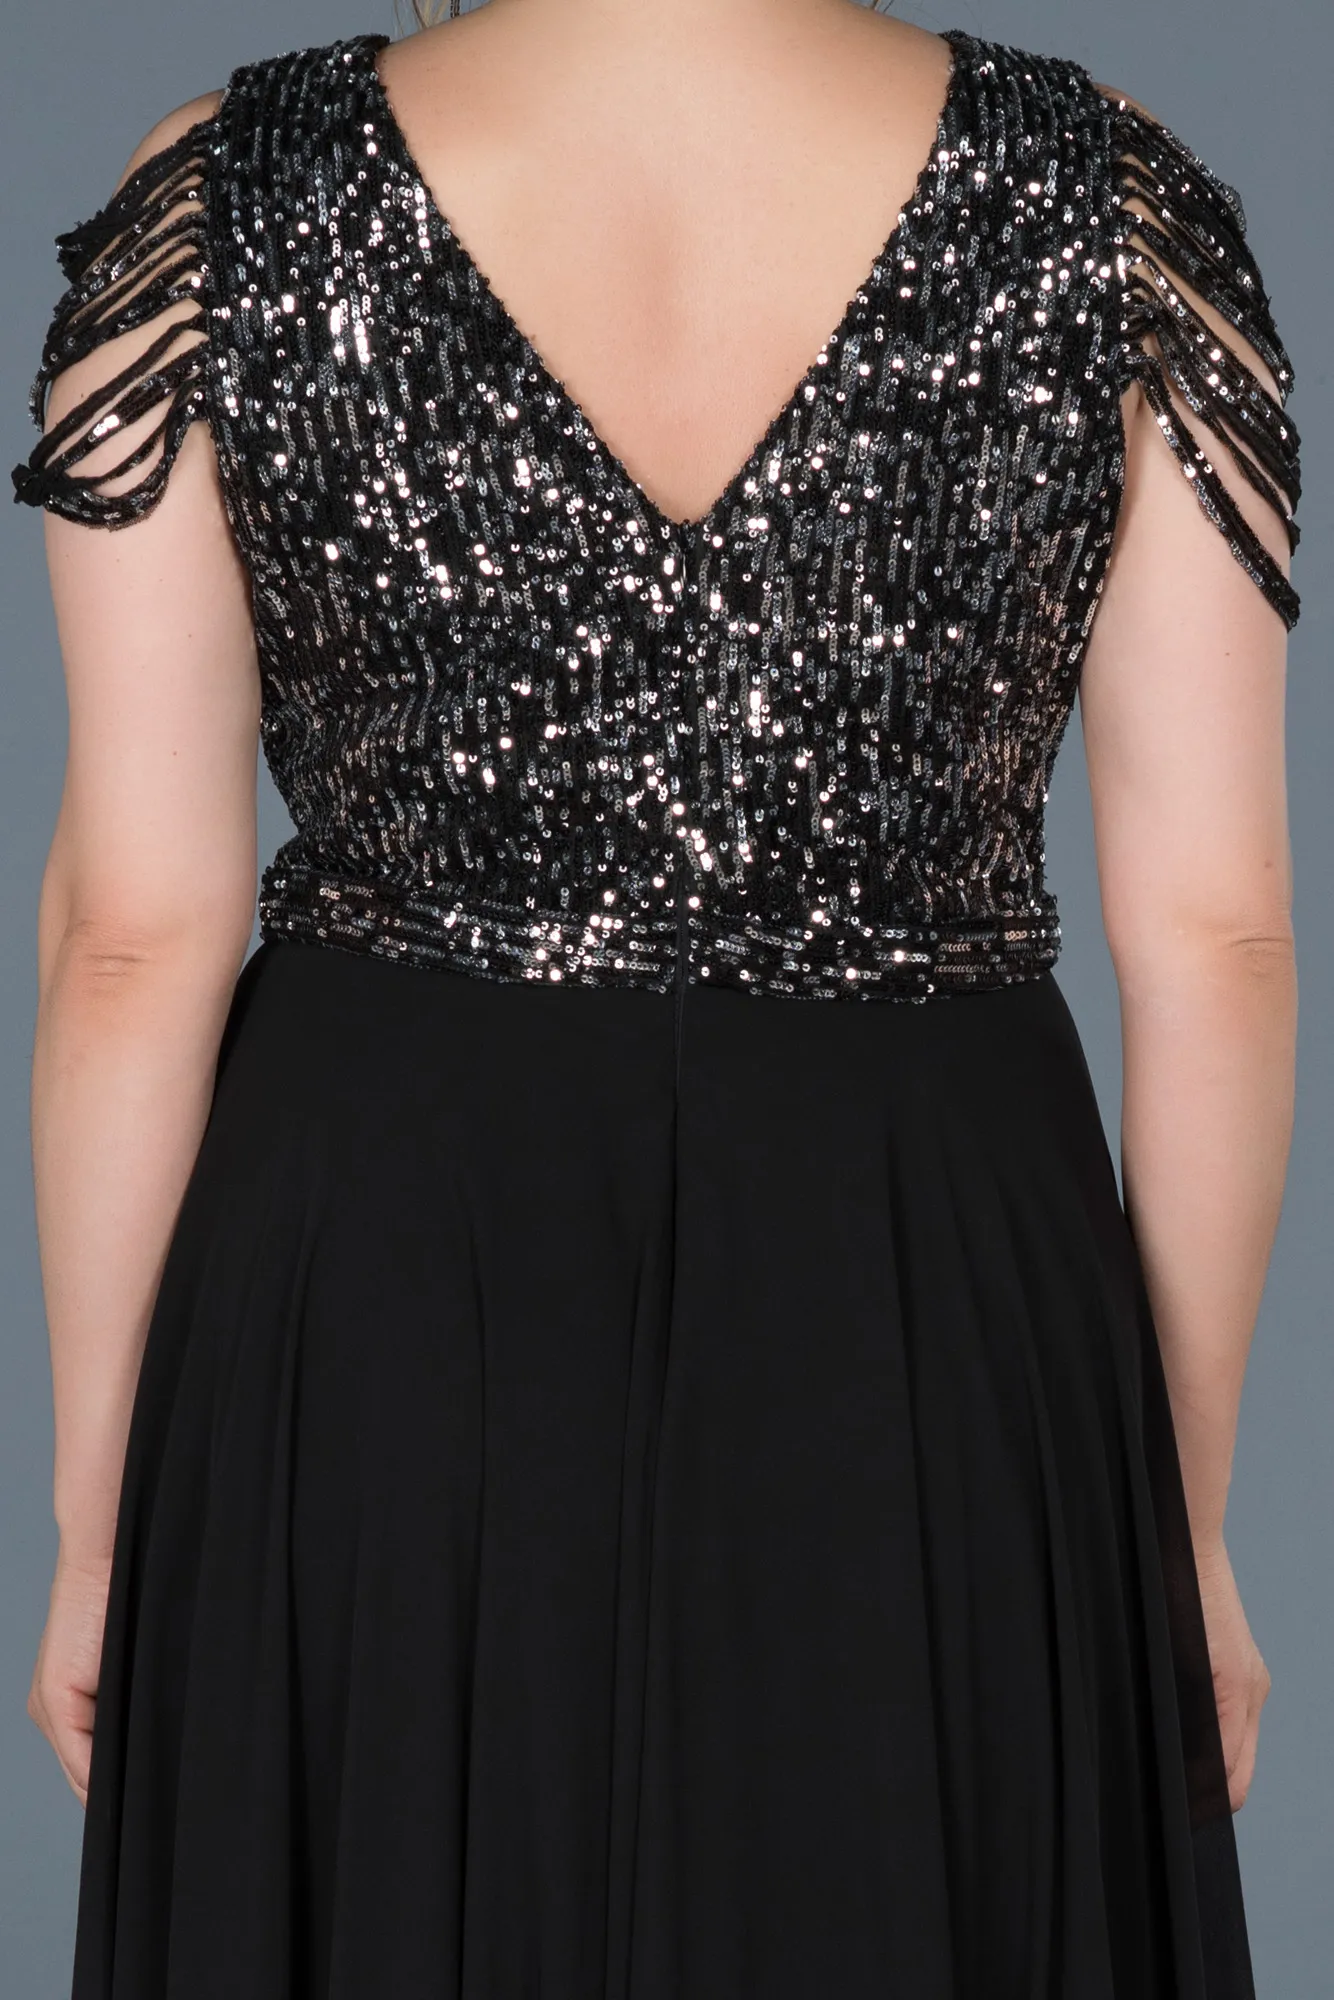 Black-Silver-Long Plus Size Evening Dress ABU828